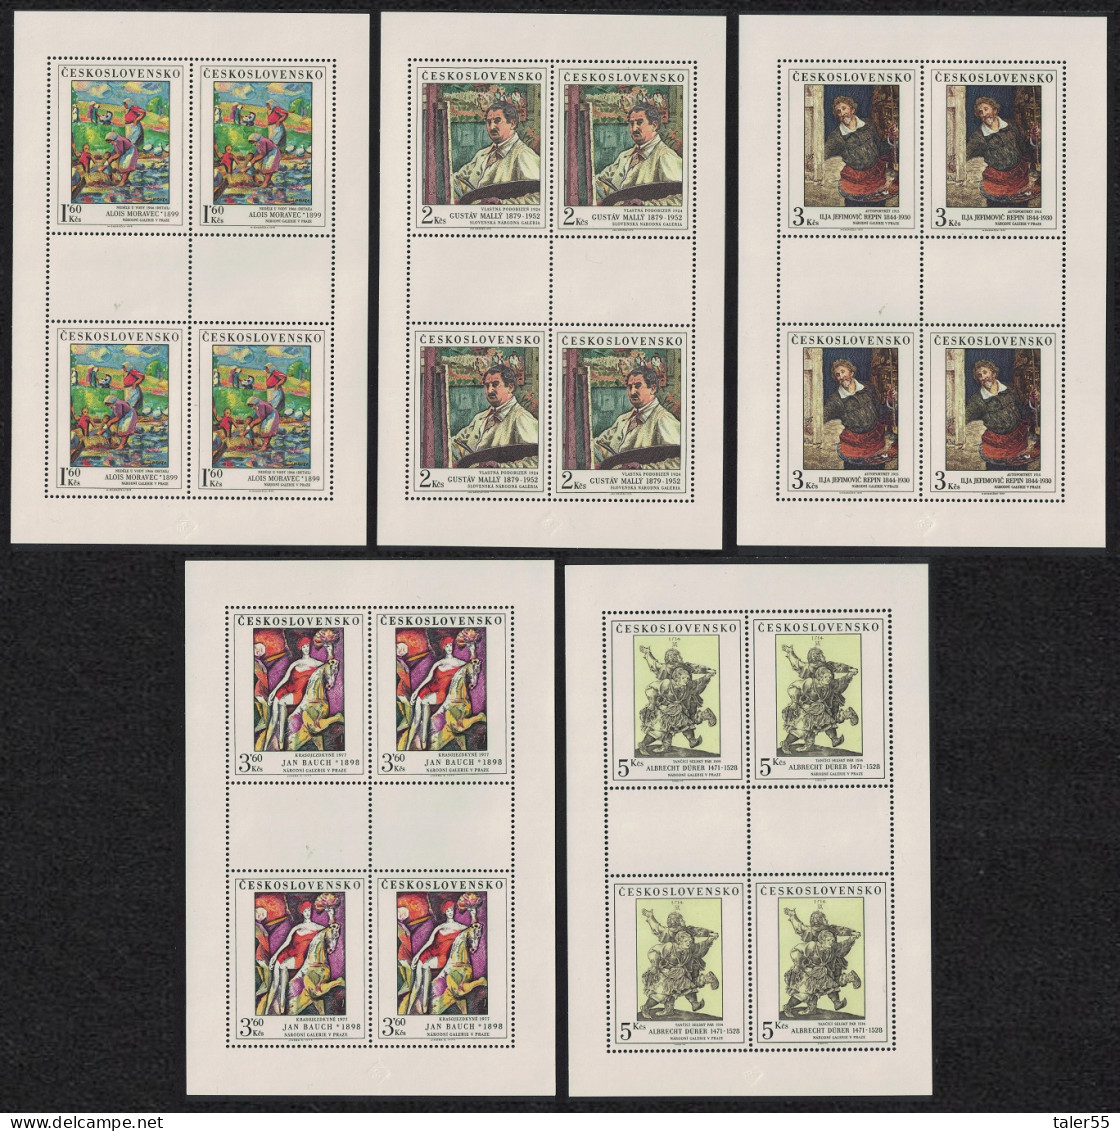 Czechoslovakia Art 13th Series 5 Sheetlets 1979 MNH SG#2495-2499 - Unused Stamps